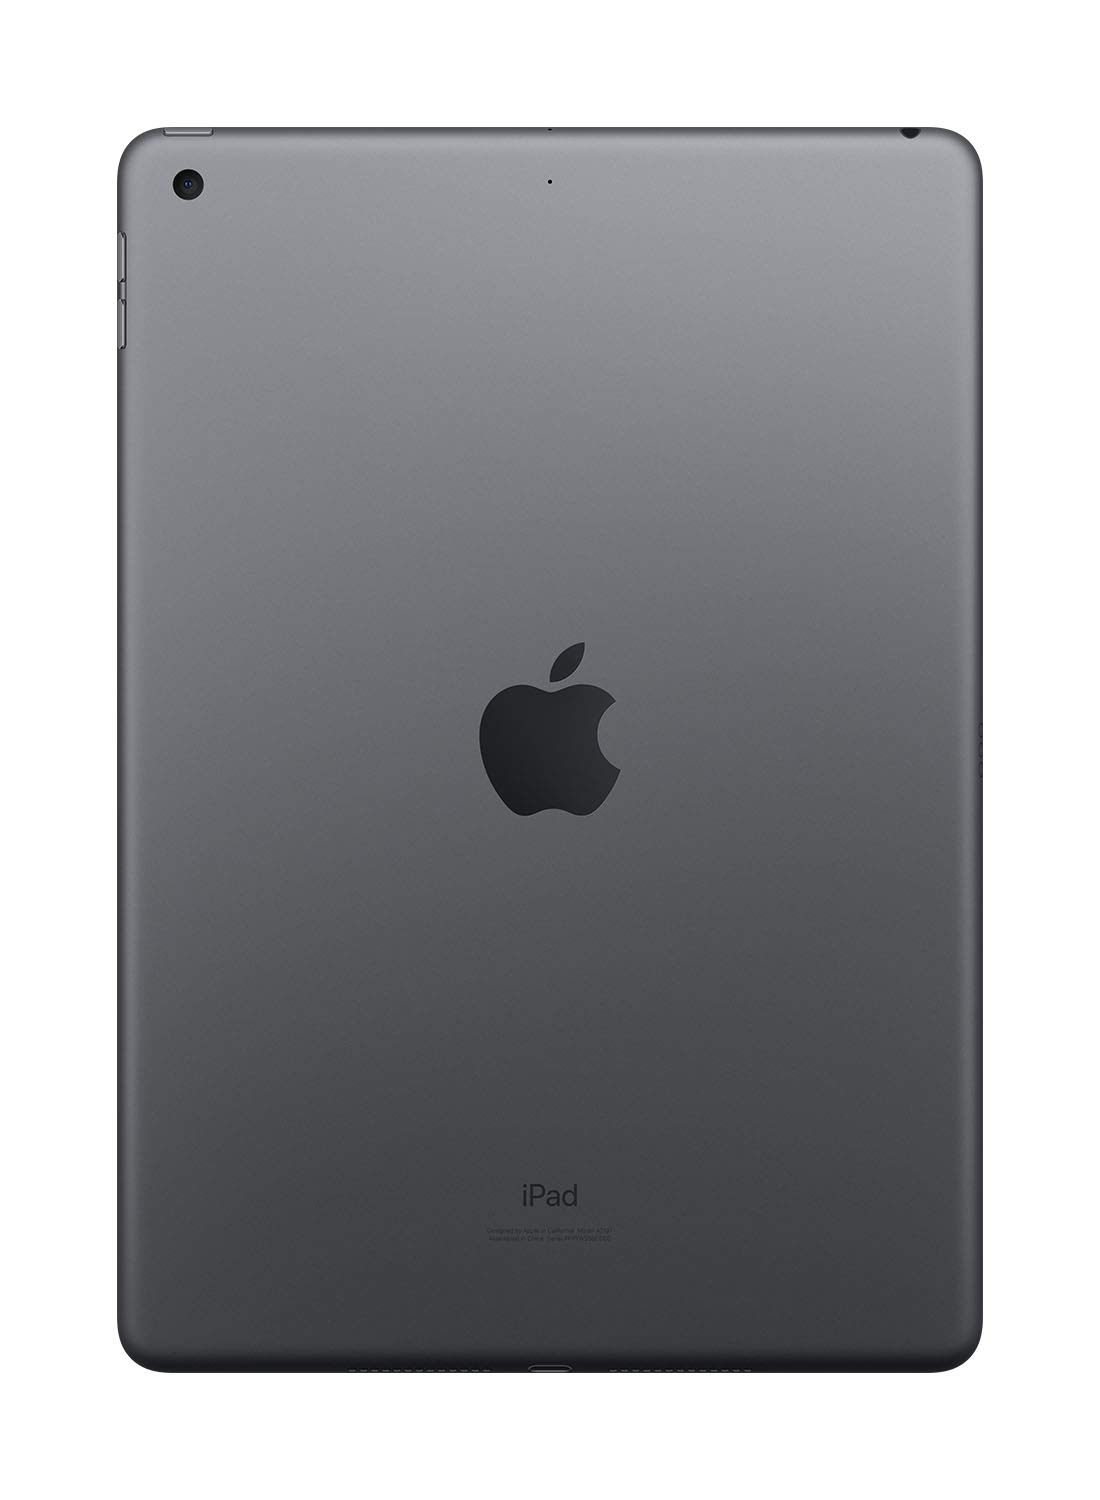 Apple iPad (10.2-inch, Wi-Fi, 32GB) - Space Gray (Previous Model)